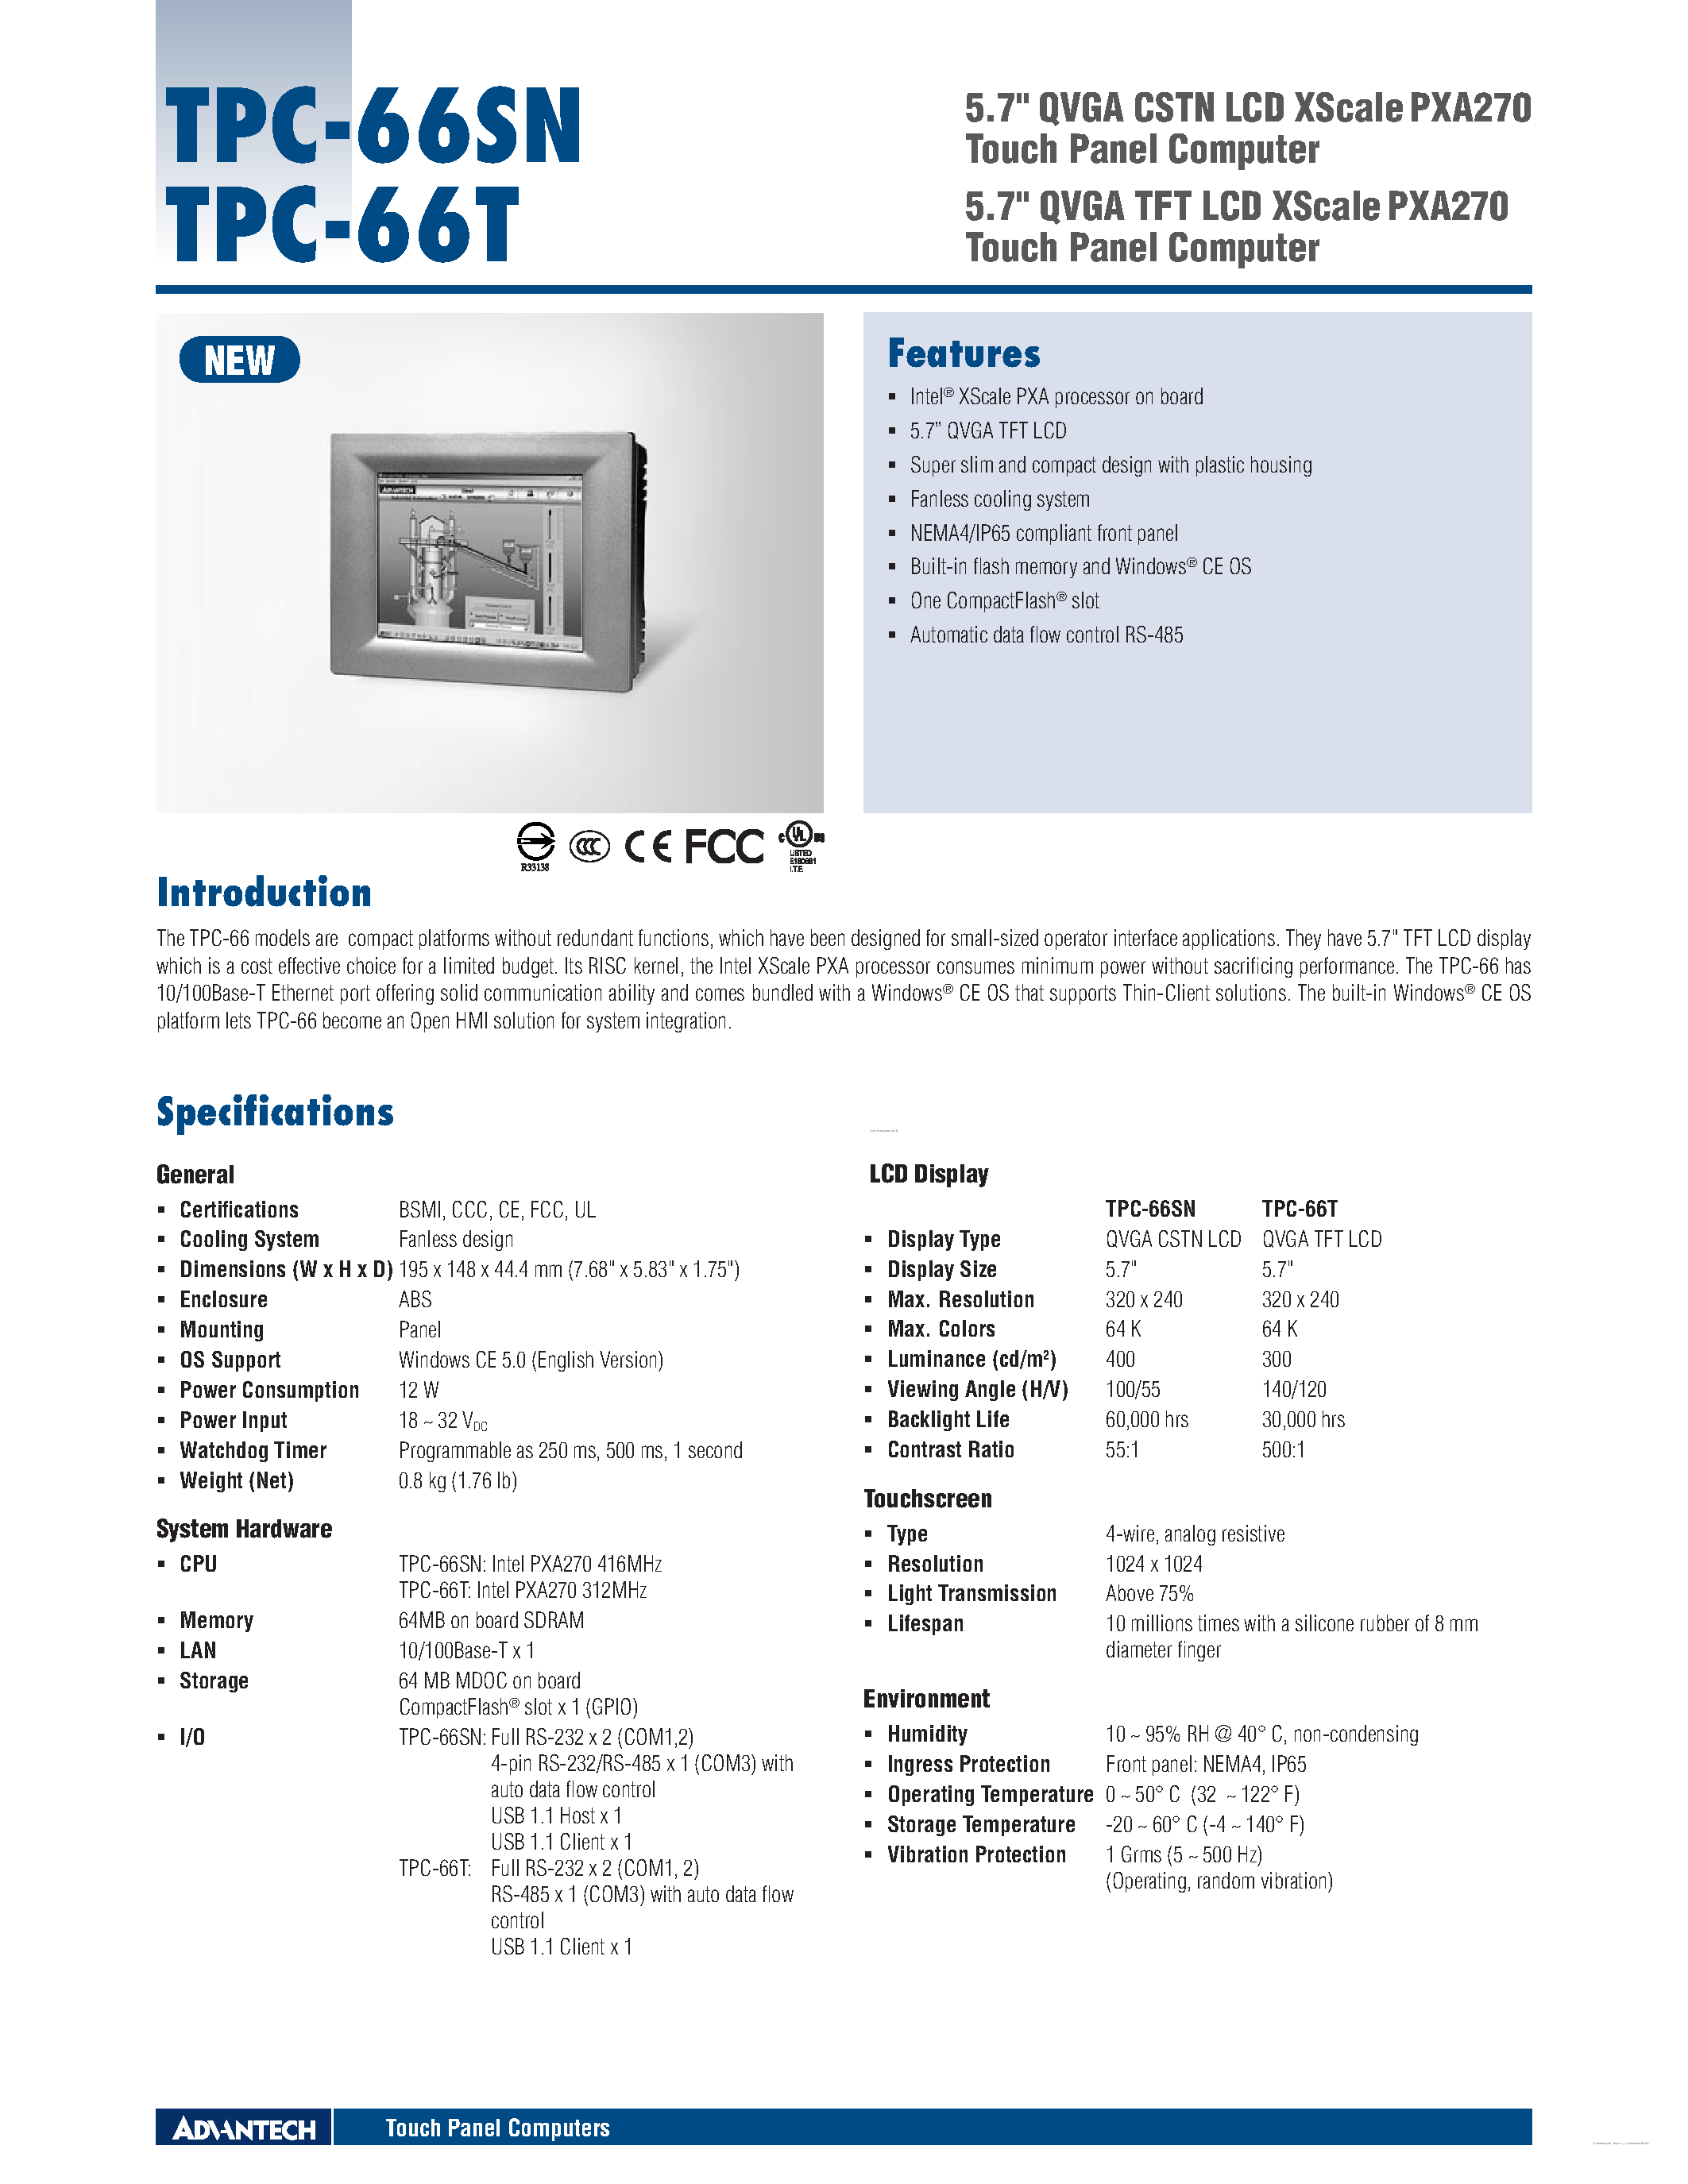 Datasheet TPC-66SN - 5.7 QVGA CSTN LCD XScale PXA270 Touch Panel Computer page 1